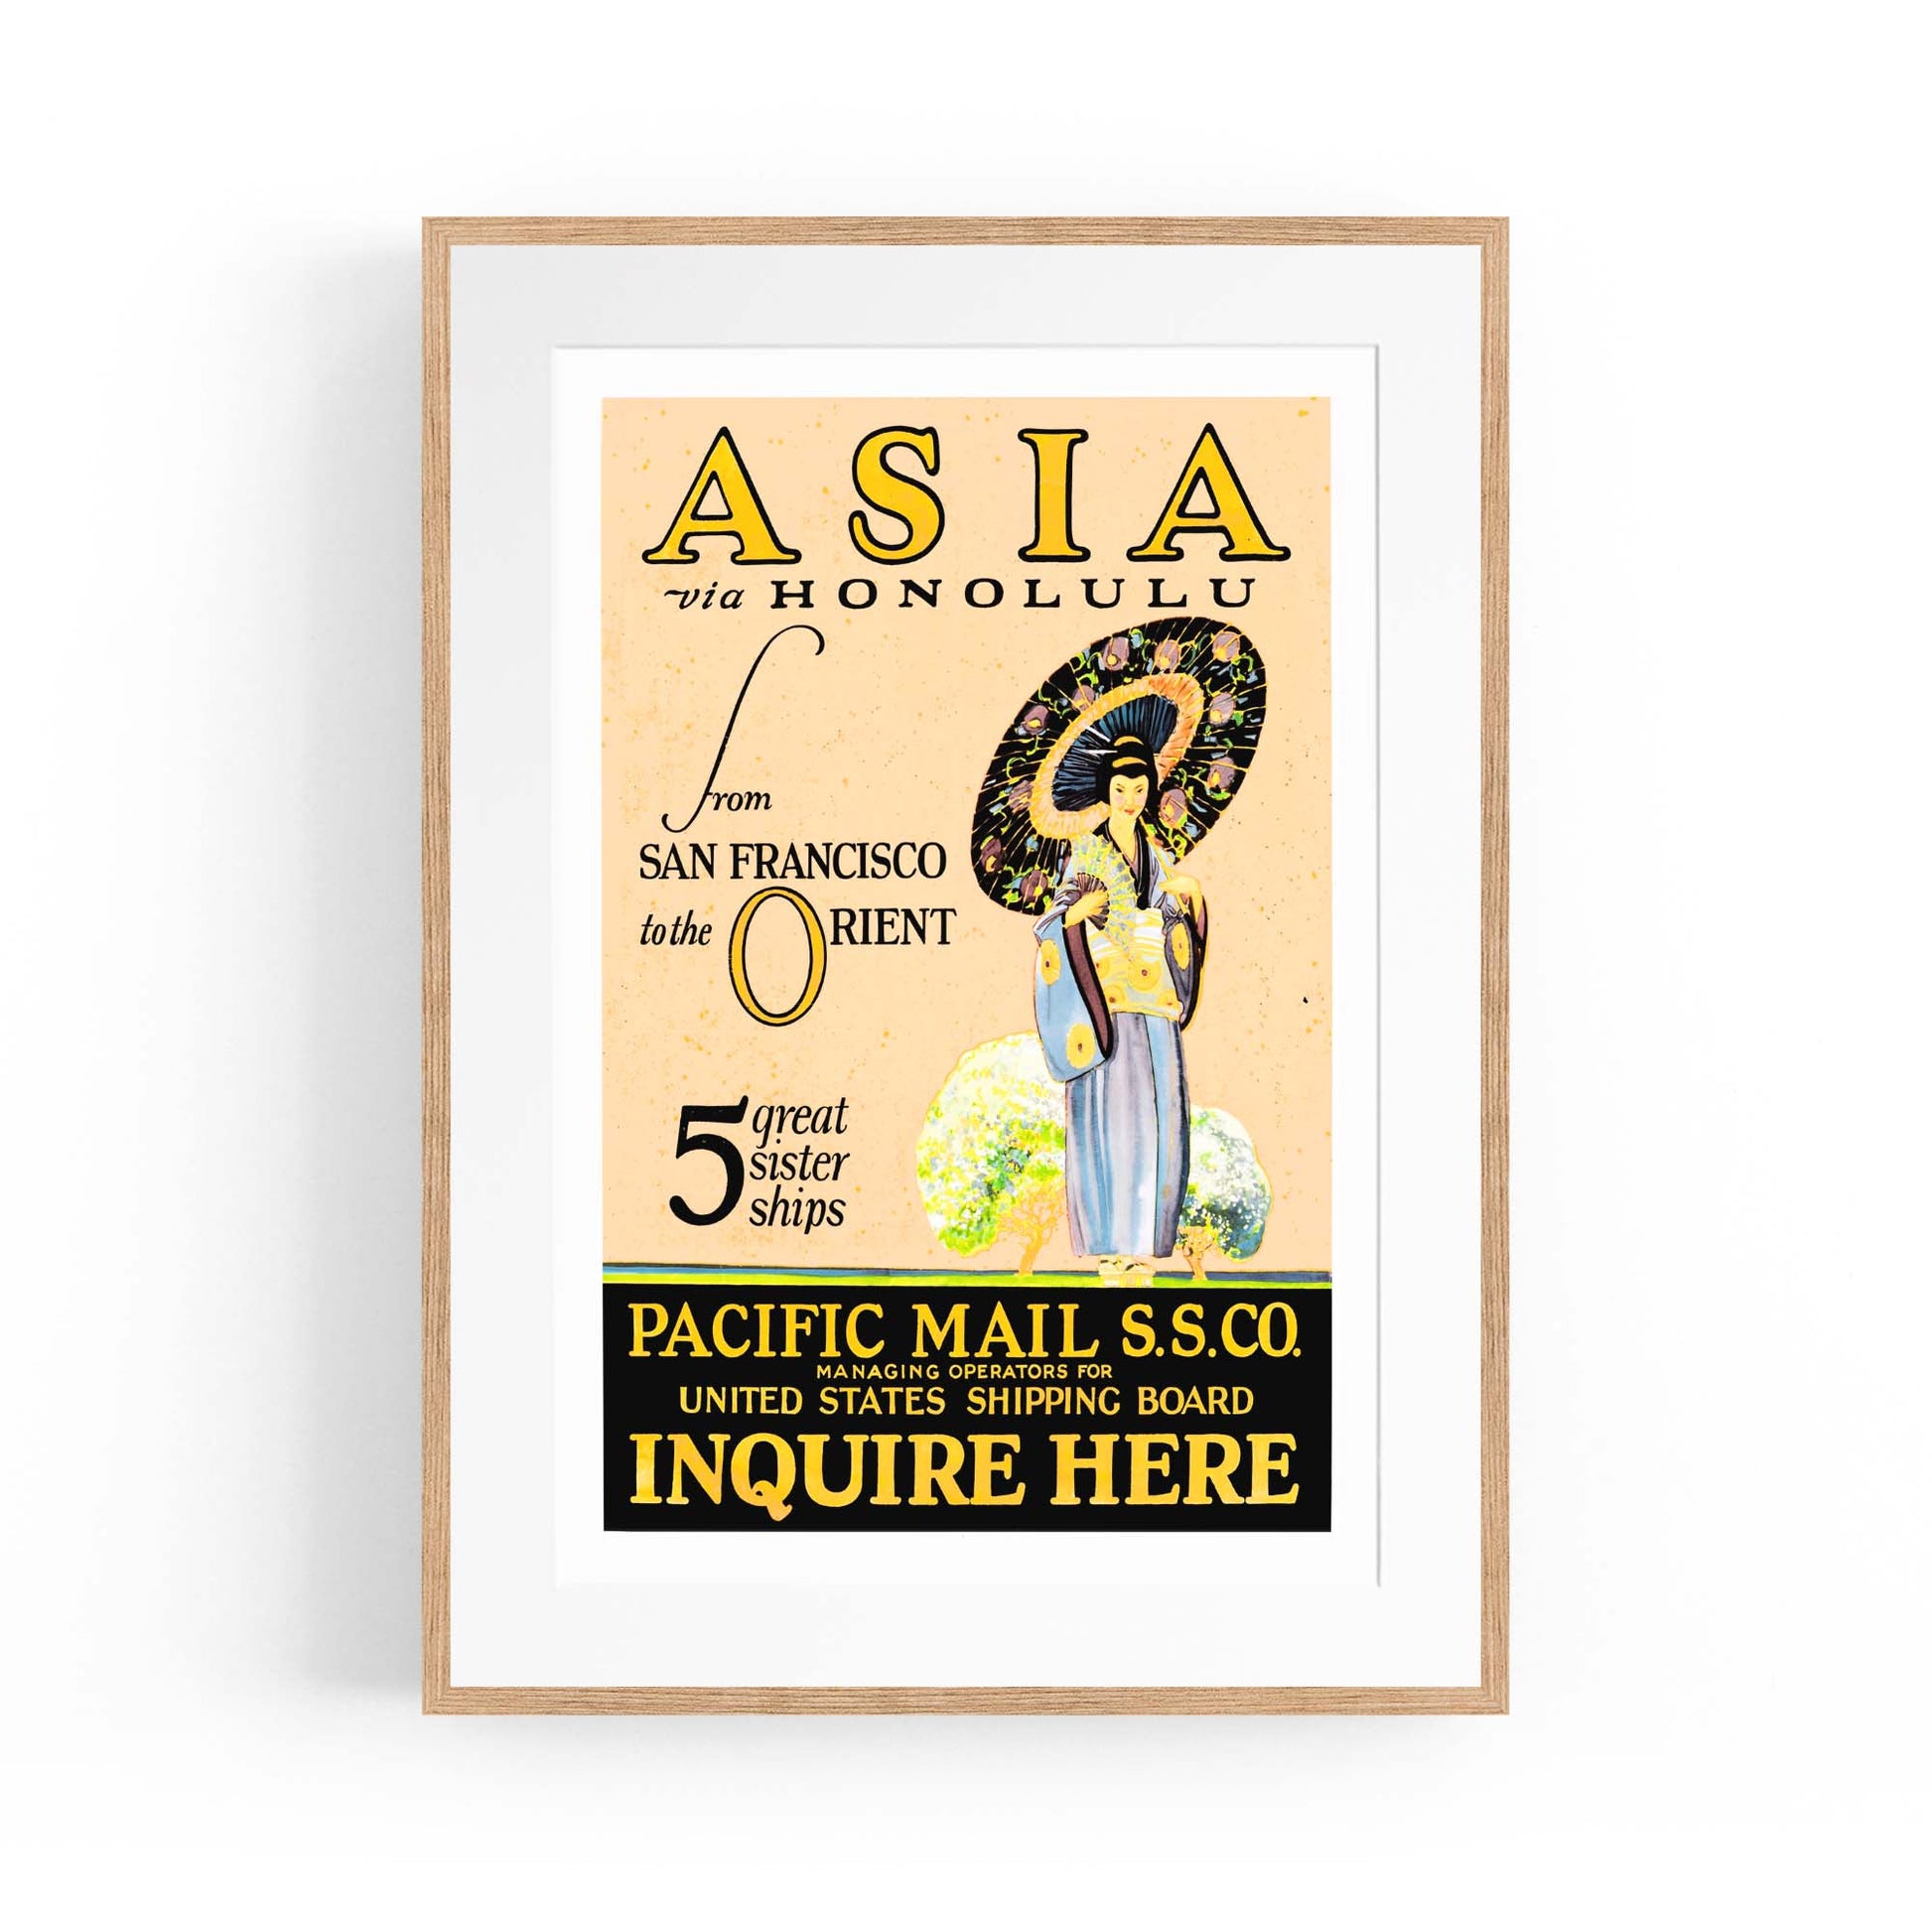 Asia via Honolulu Vintage Travel Advert Wall Art - The Affordable Art Company